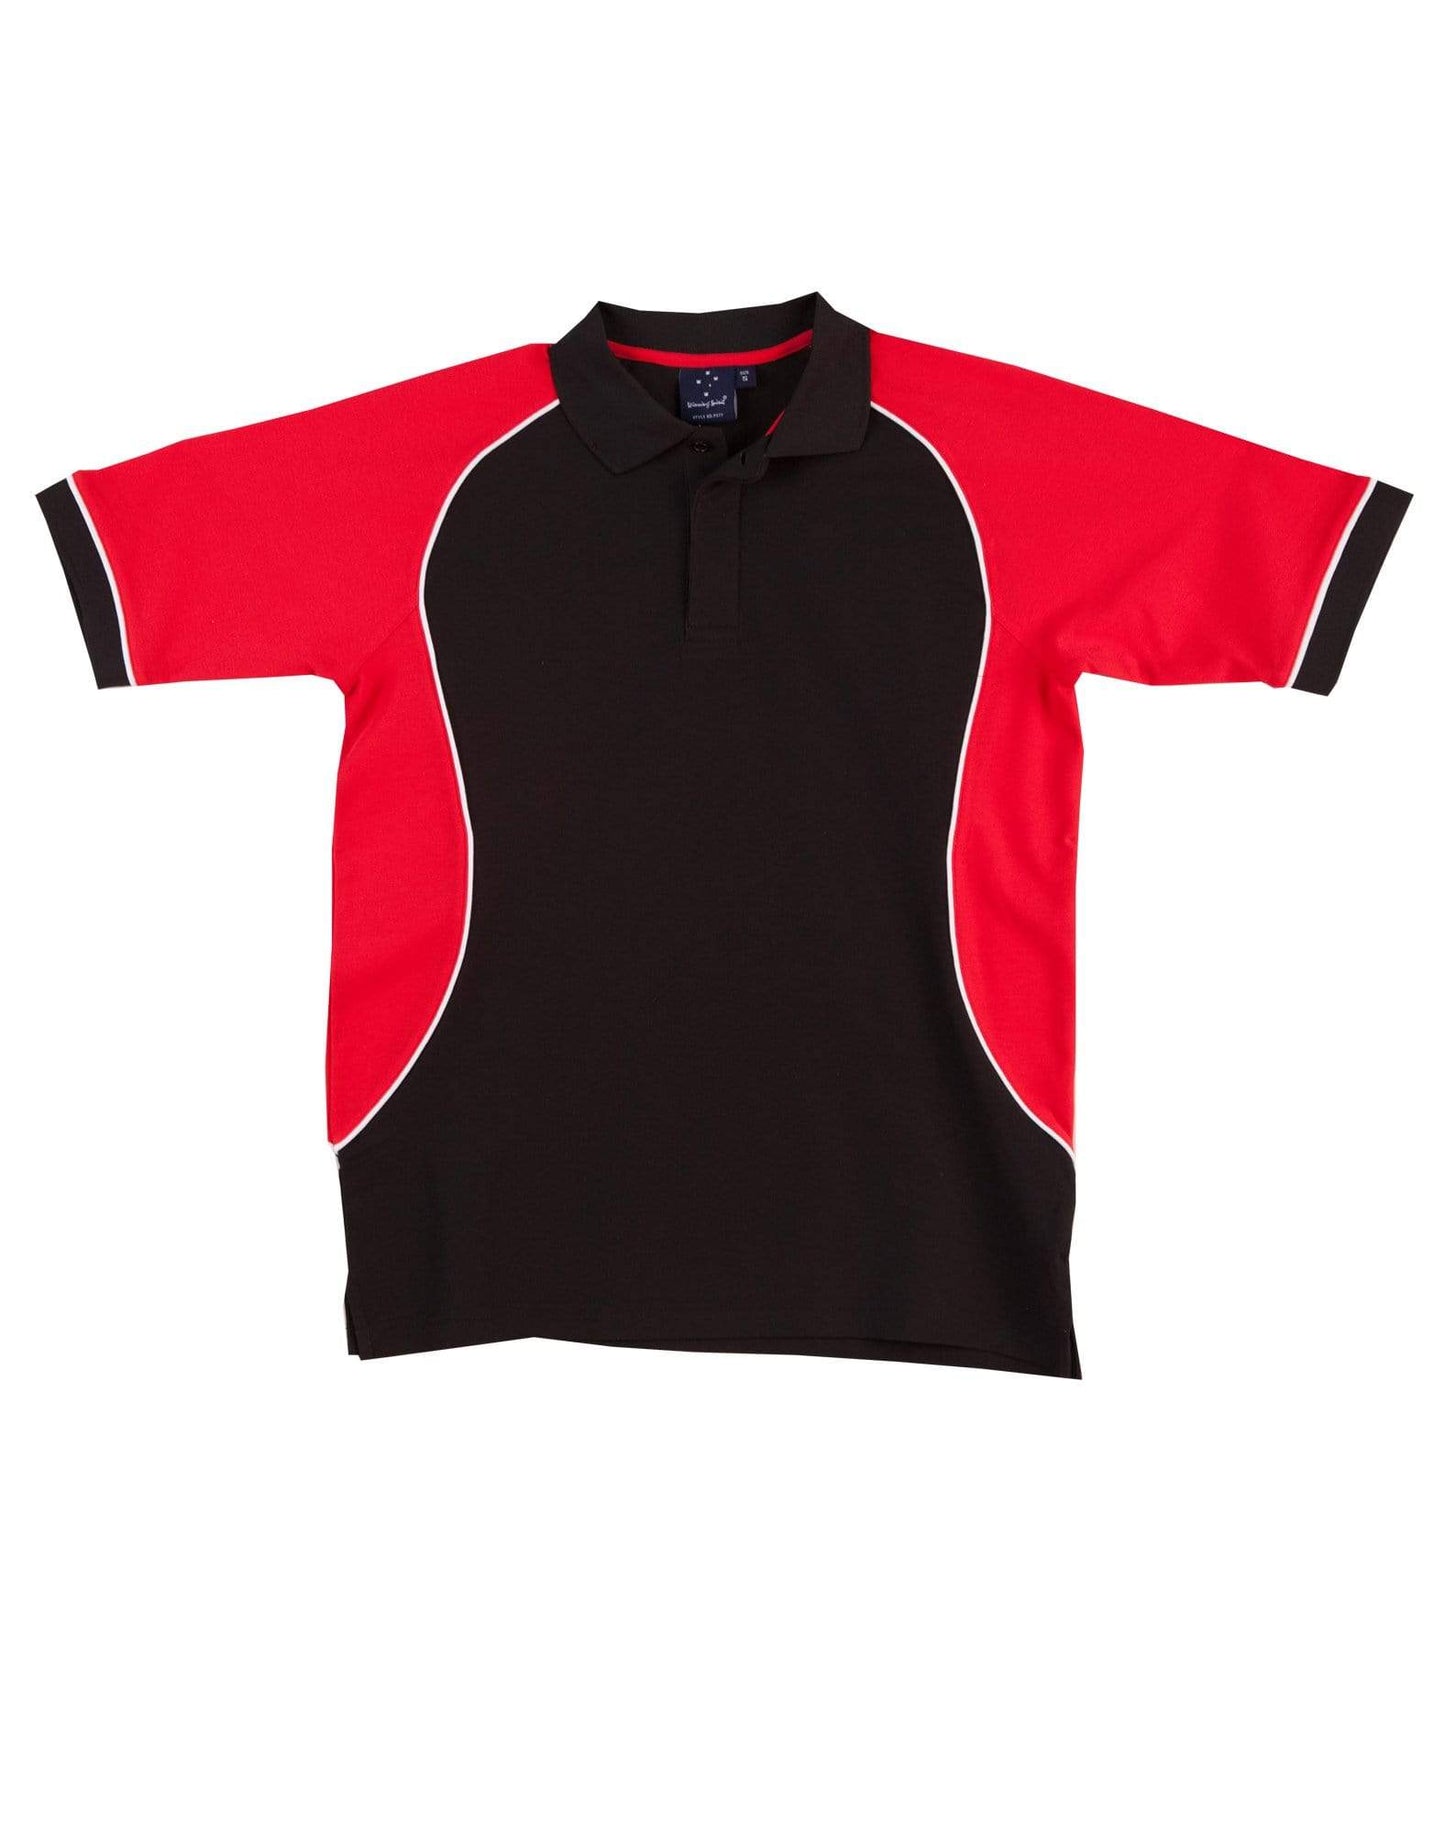 Winning Spirit Casual Wear Black/ White/Red / 8 Winning Spirit Arena Polo Shirt Women's Ps78